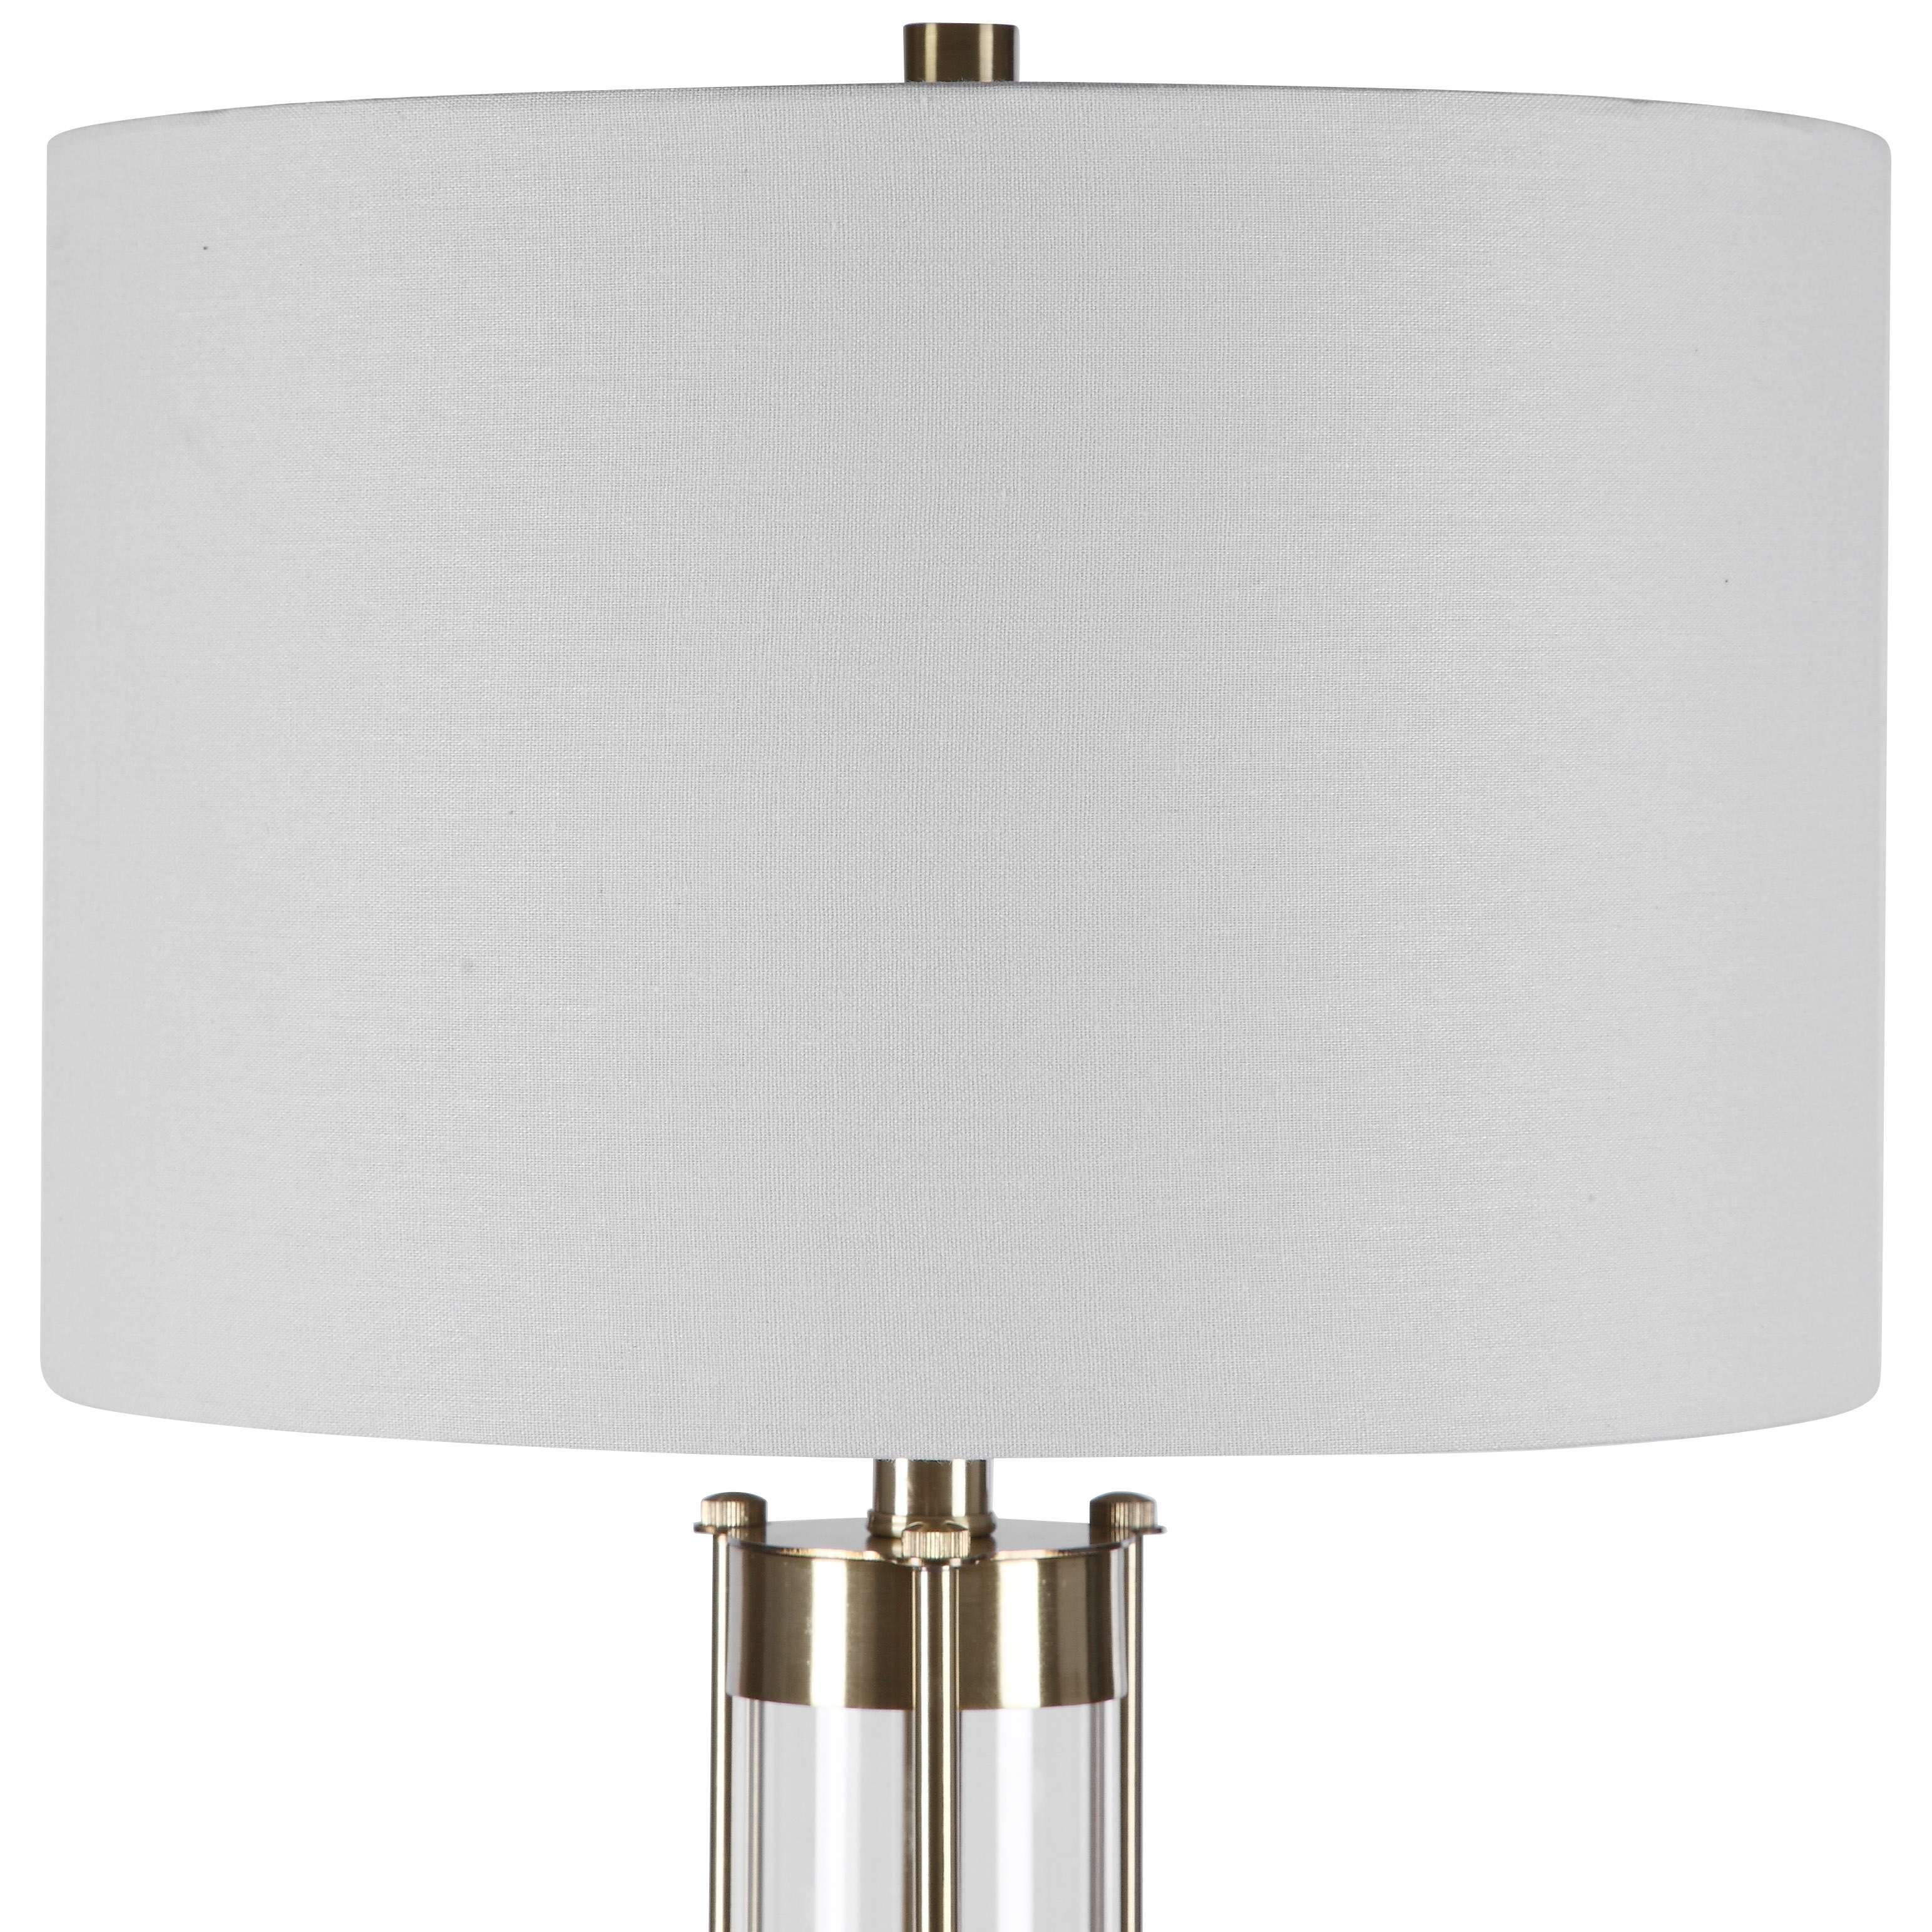 TABLE LAMP - GOLDEN BRASS - Image 1